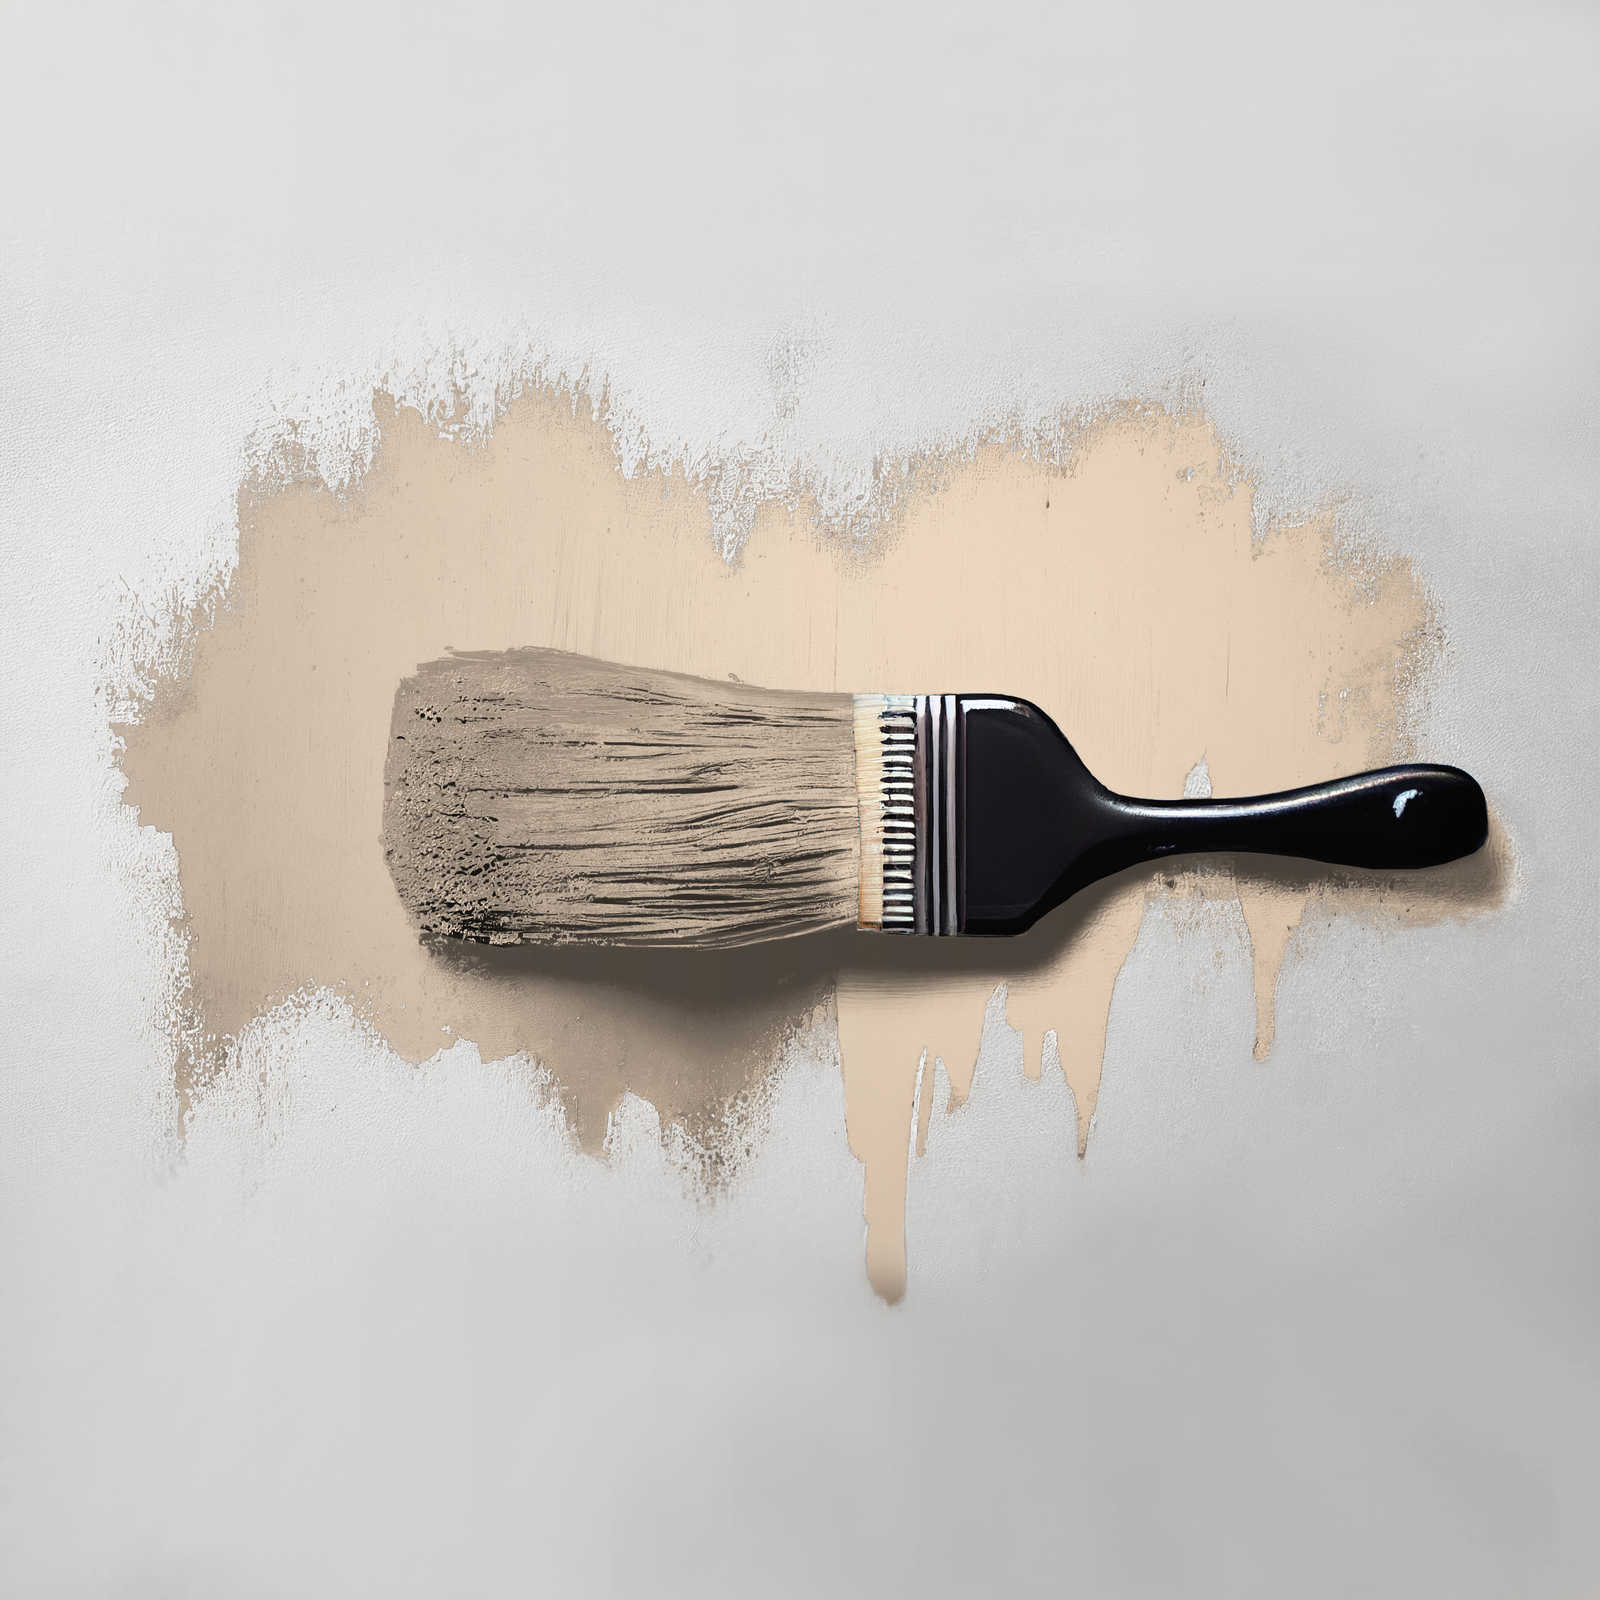             Pittura murale TCK5008 »Humble Hummus« in beige caldo – 5,0 litri
        